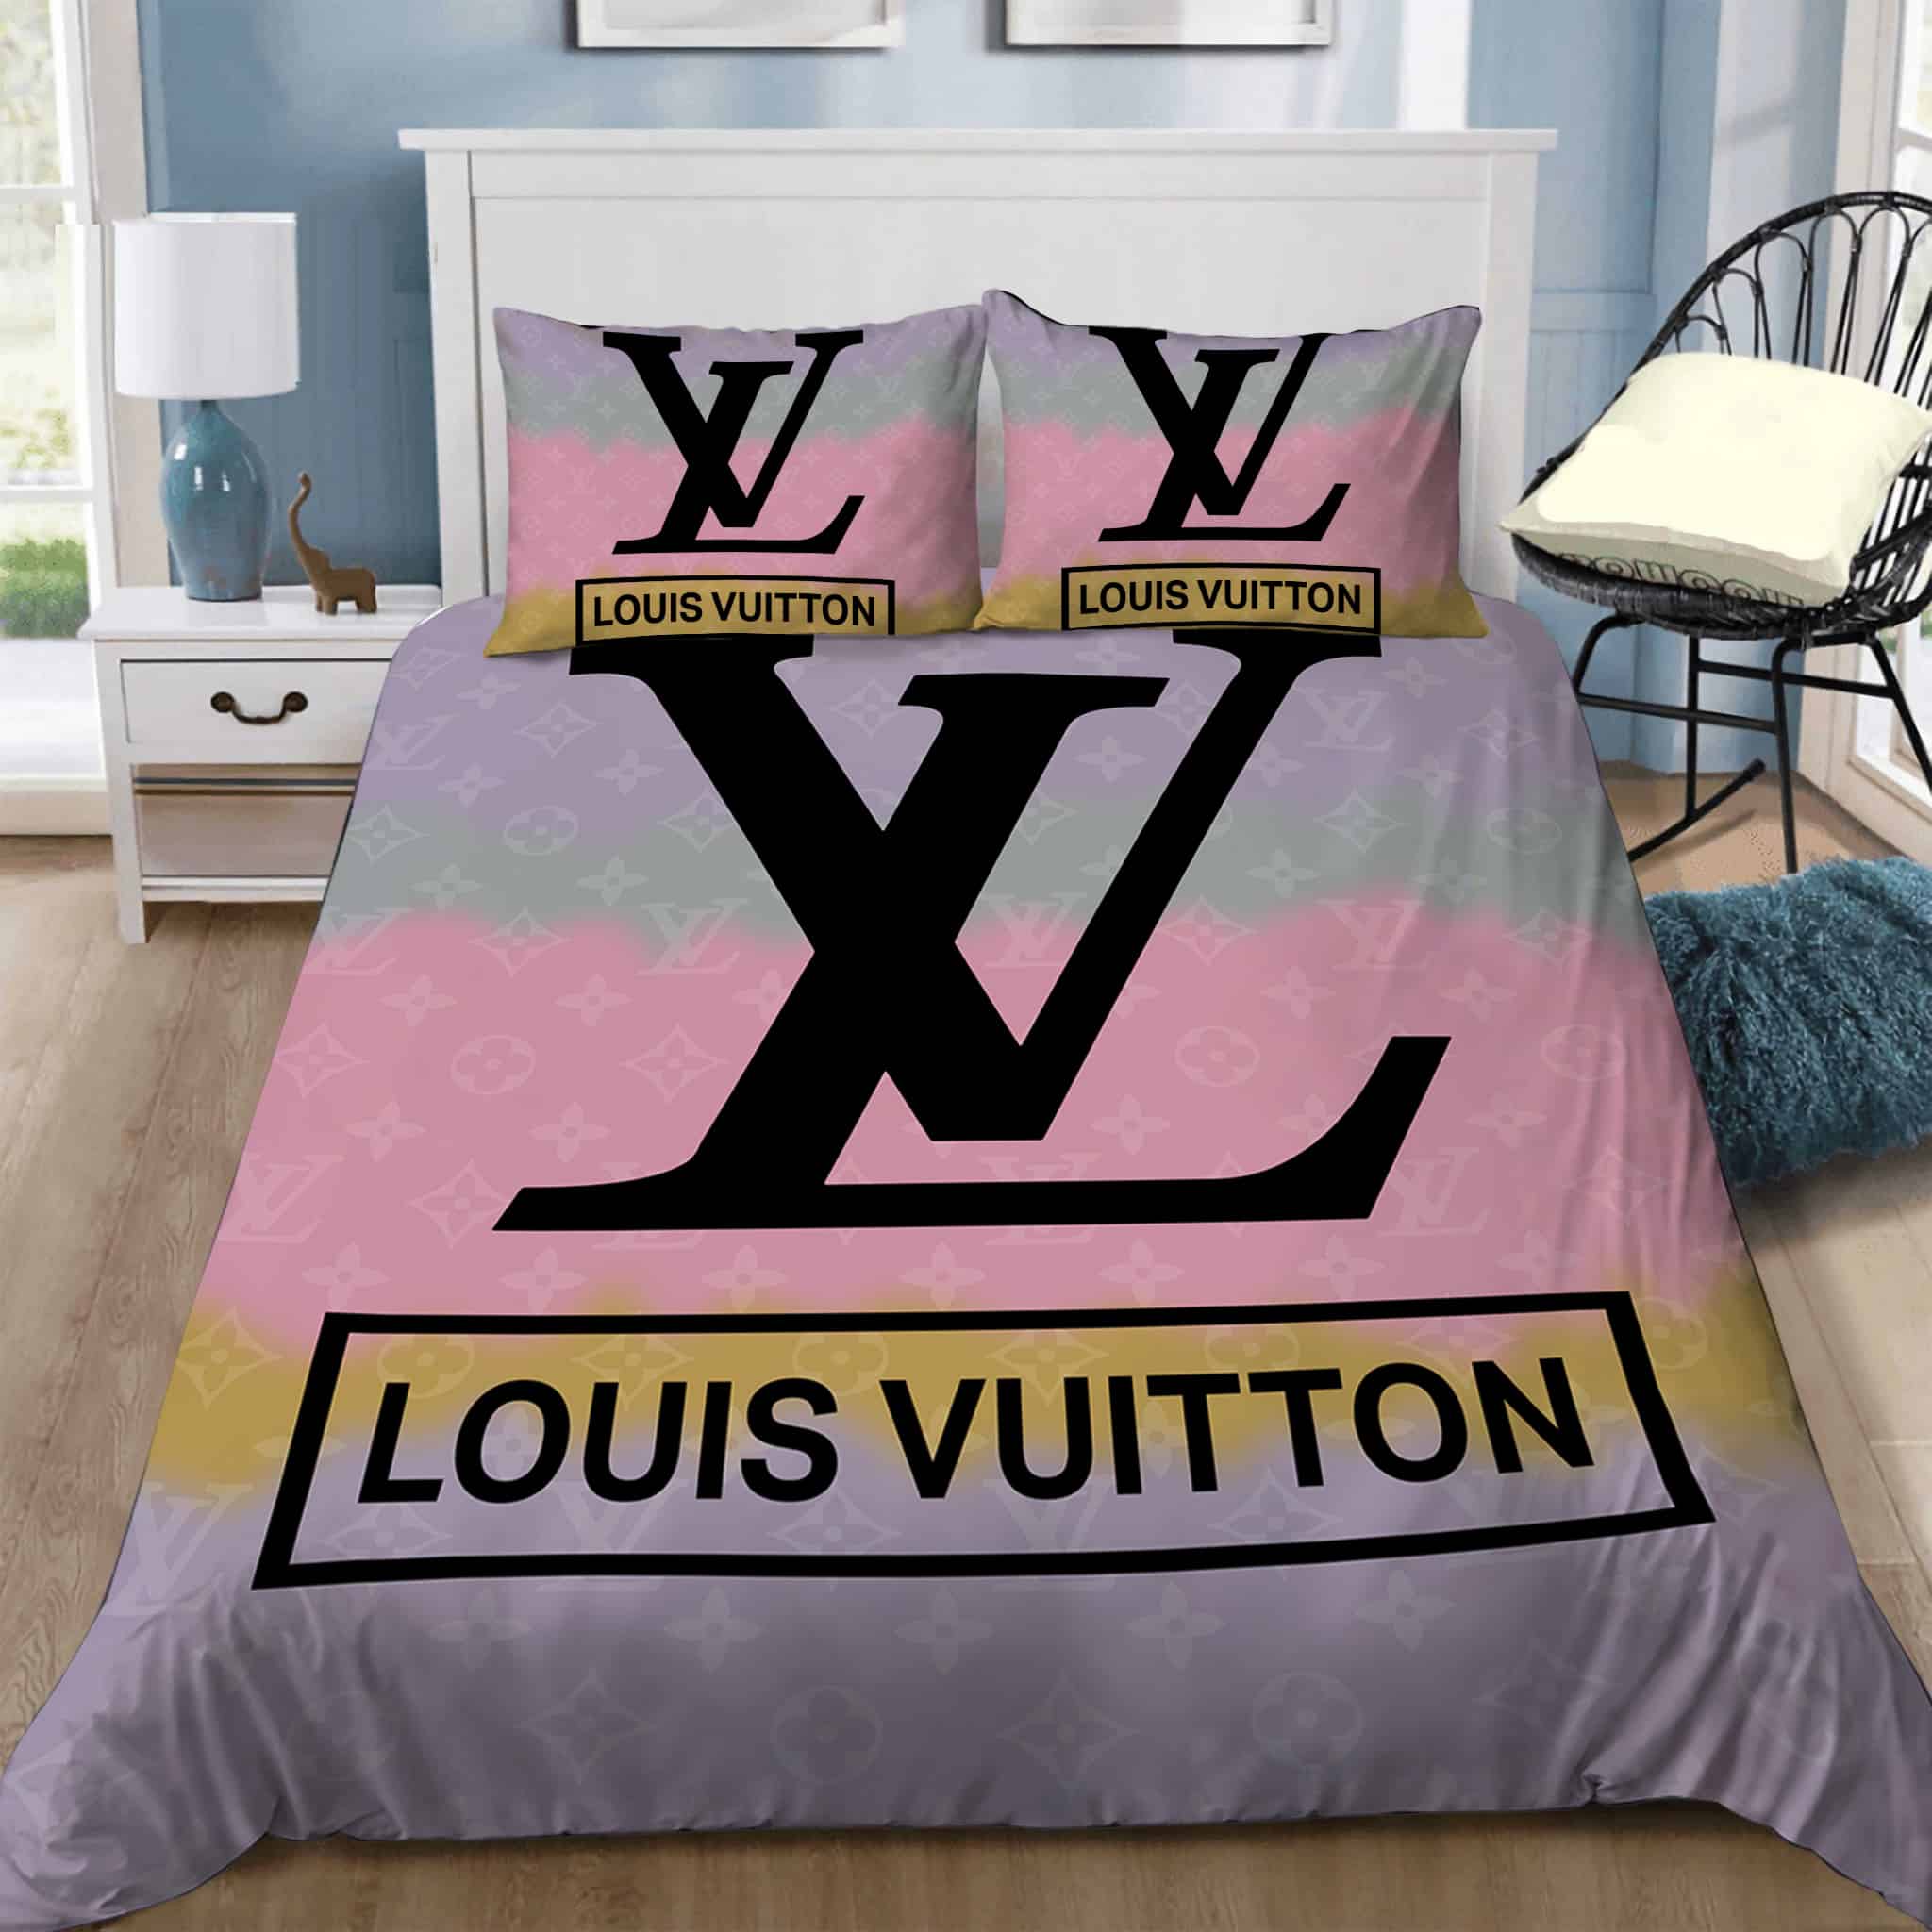 Louis Vuitton French Luxury Brand 3D Bedding Set